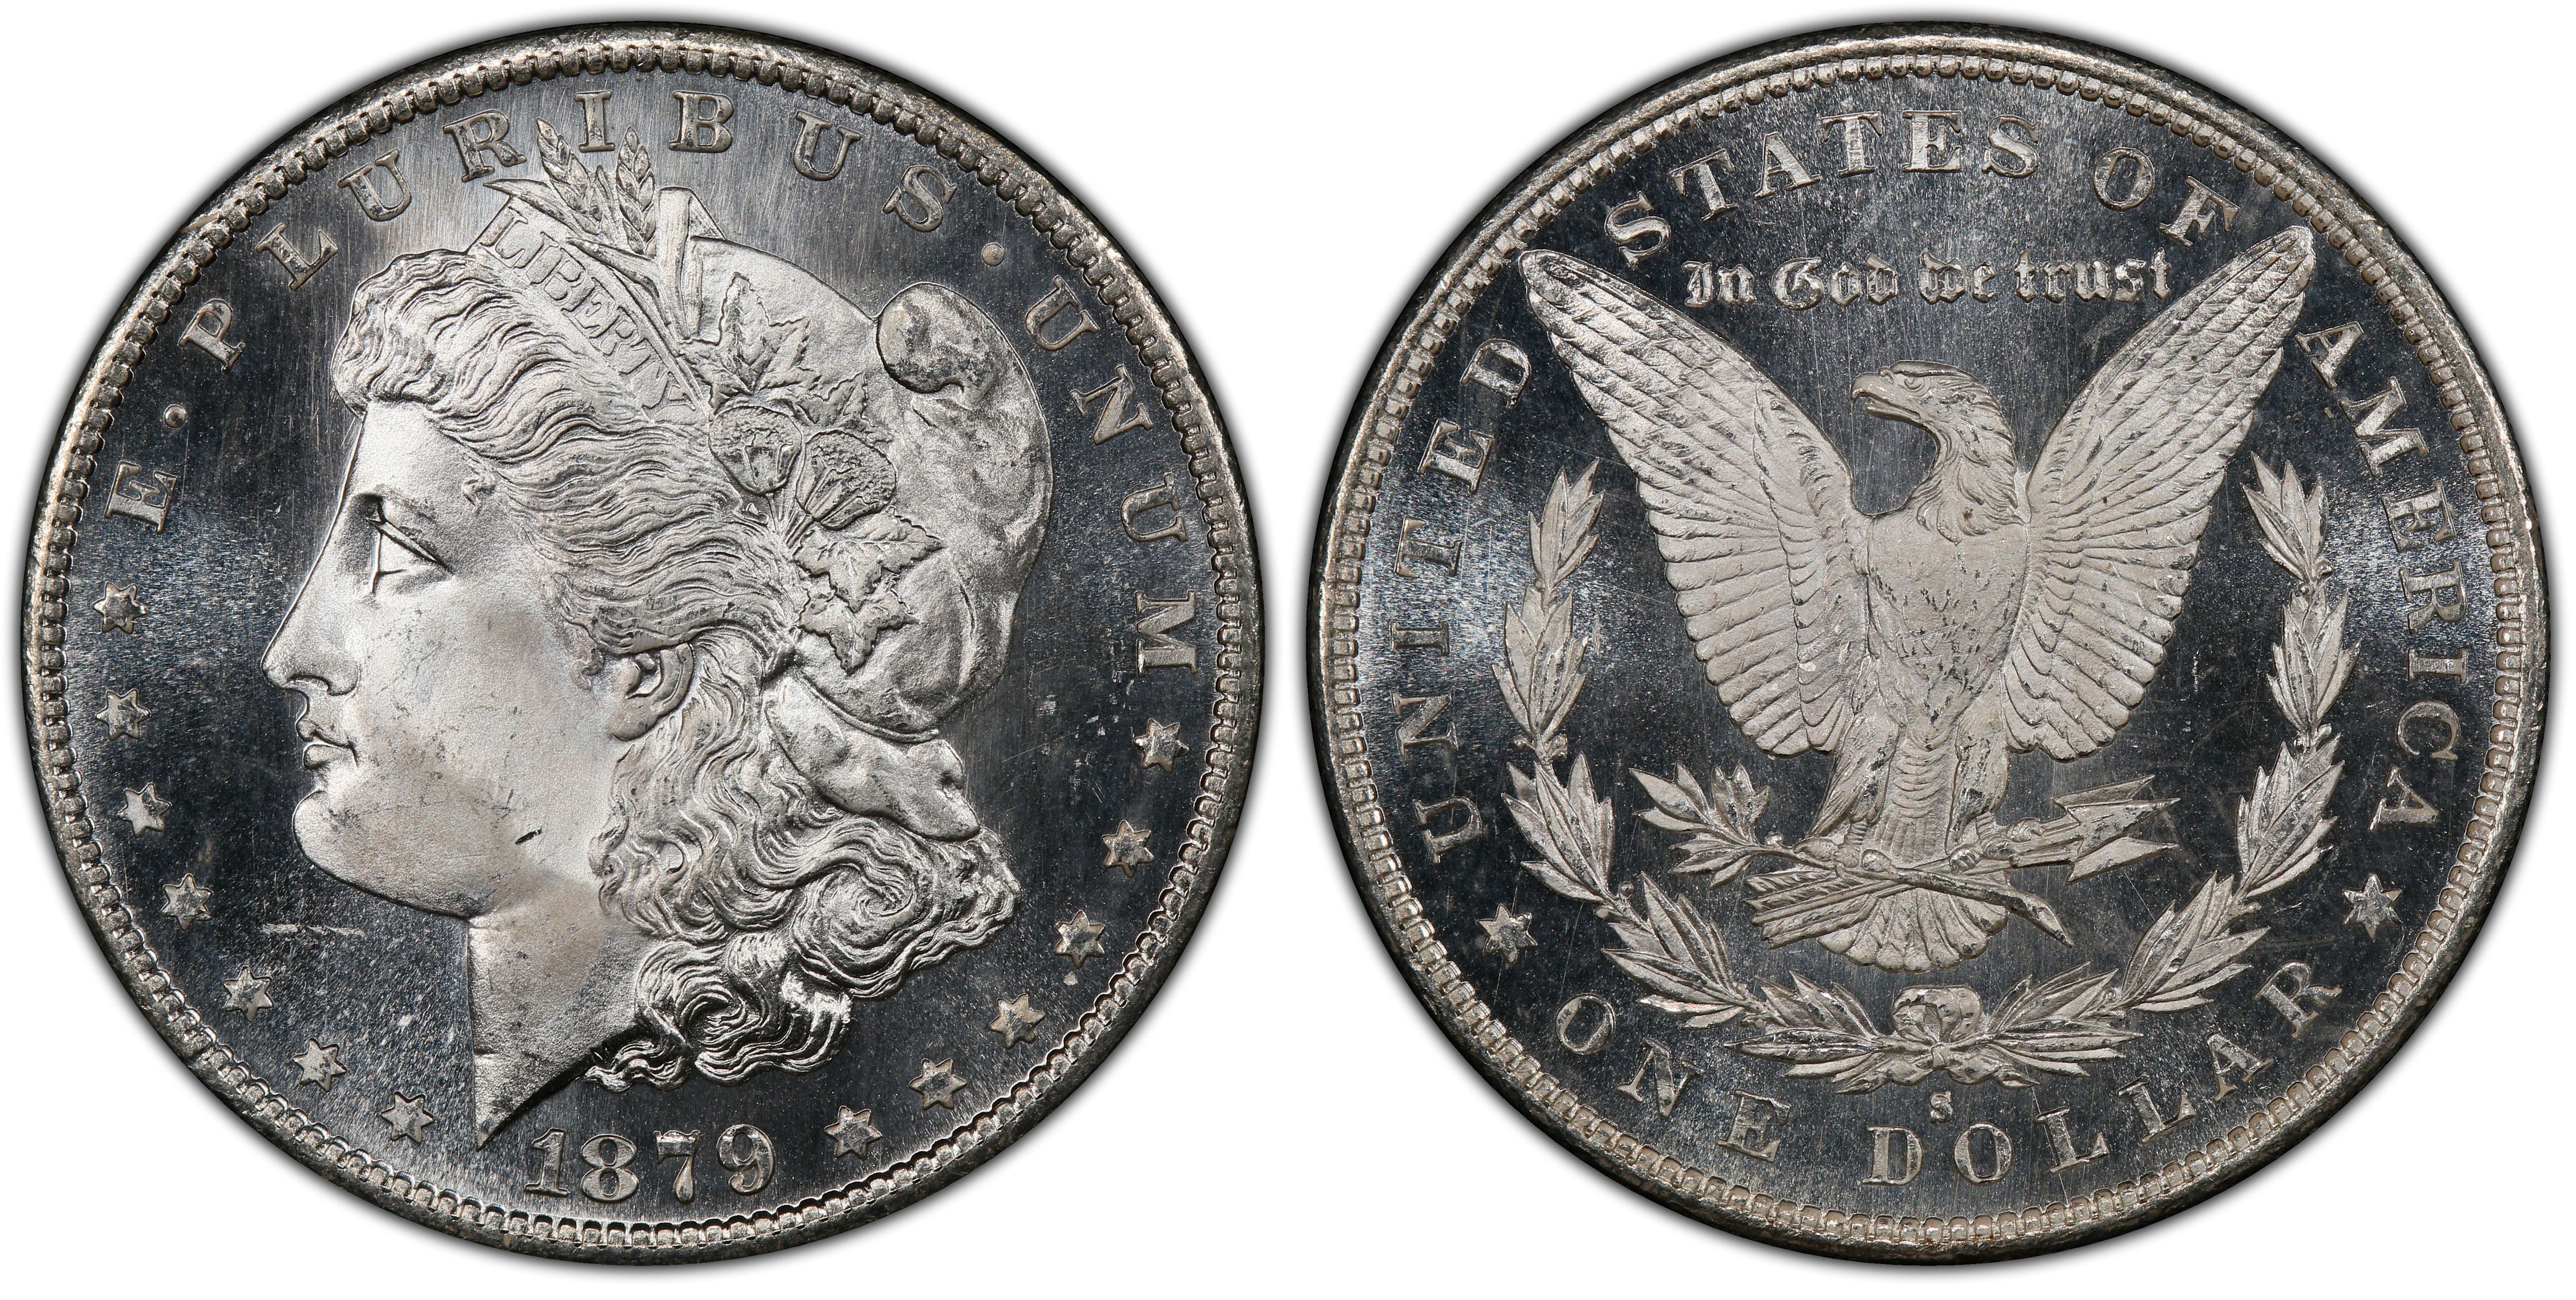 1879-S $1, PL (Regular Strike) Morgan Dollar - PCGS CoinFacts